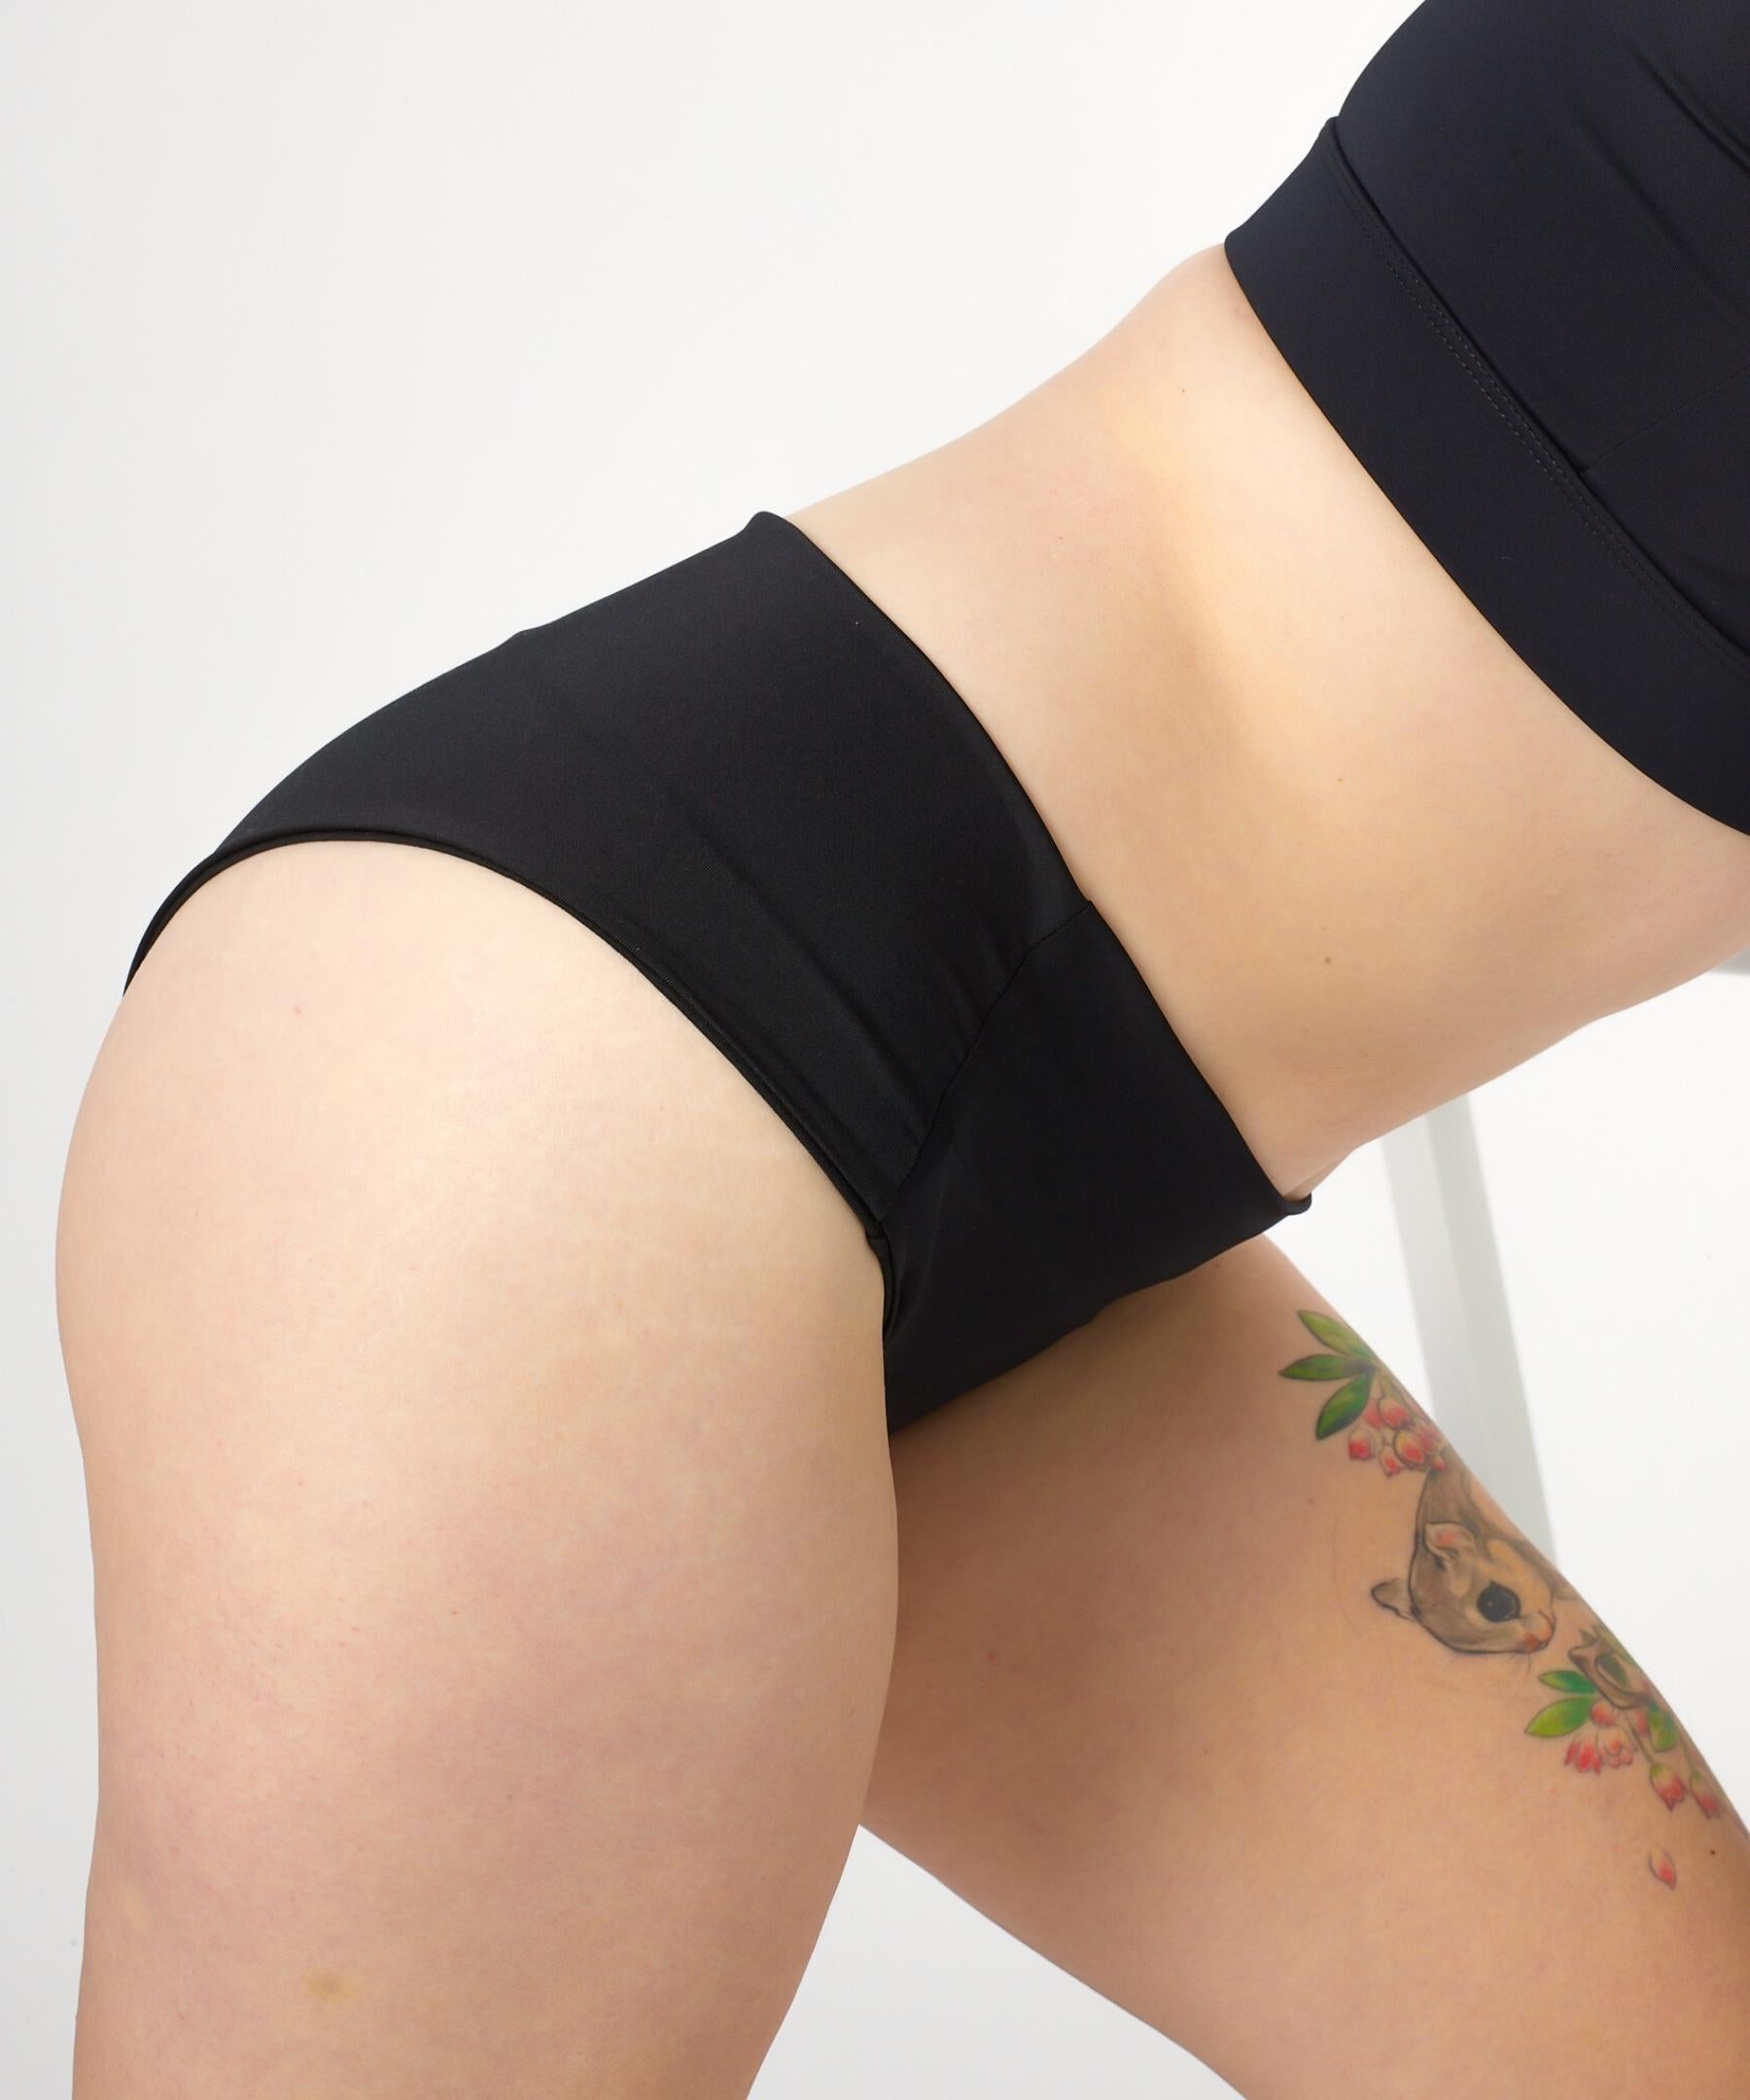 Ultra Thin Cooling Tummy Control Ice Silk Shorts Women High Waist